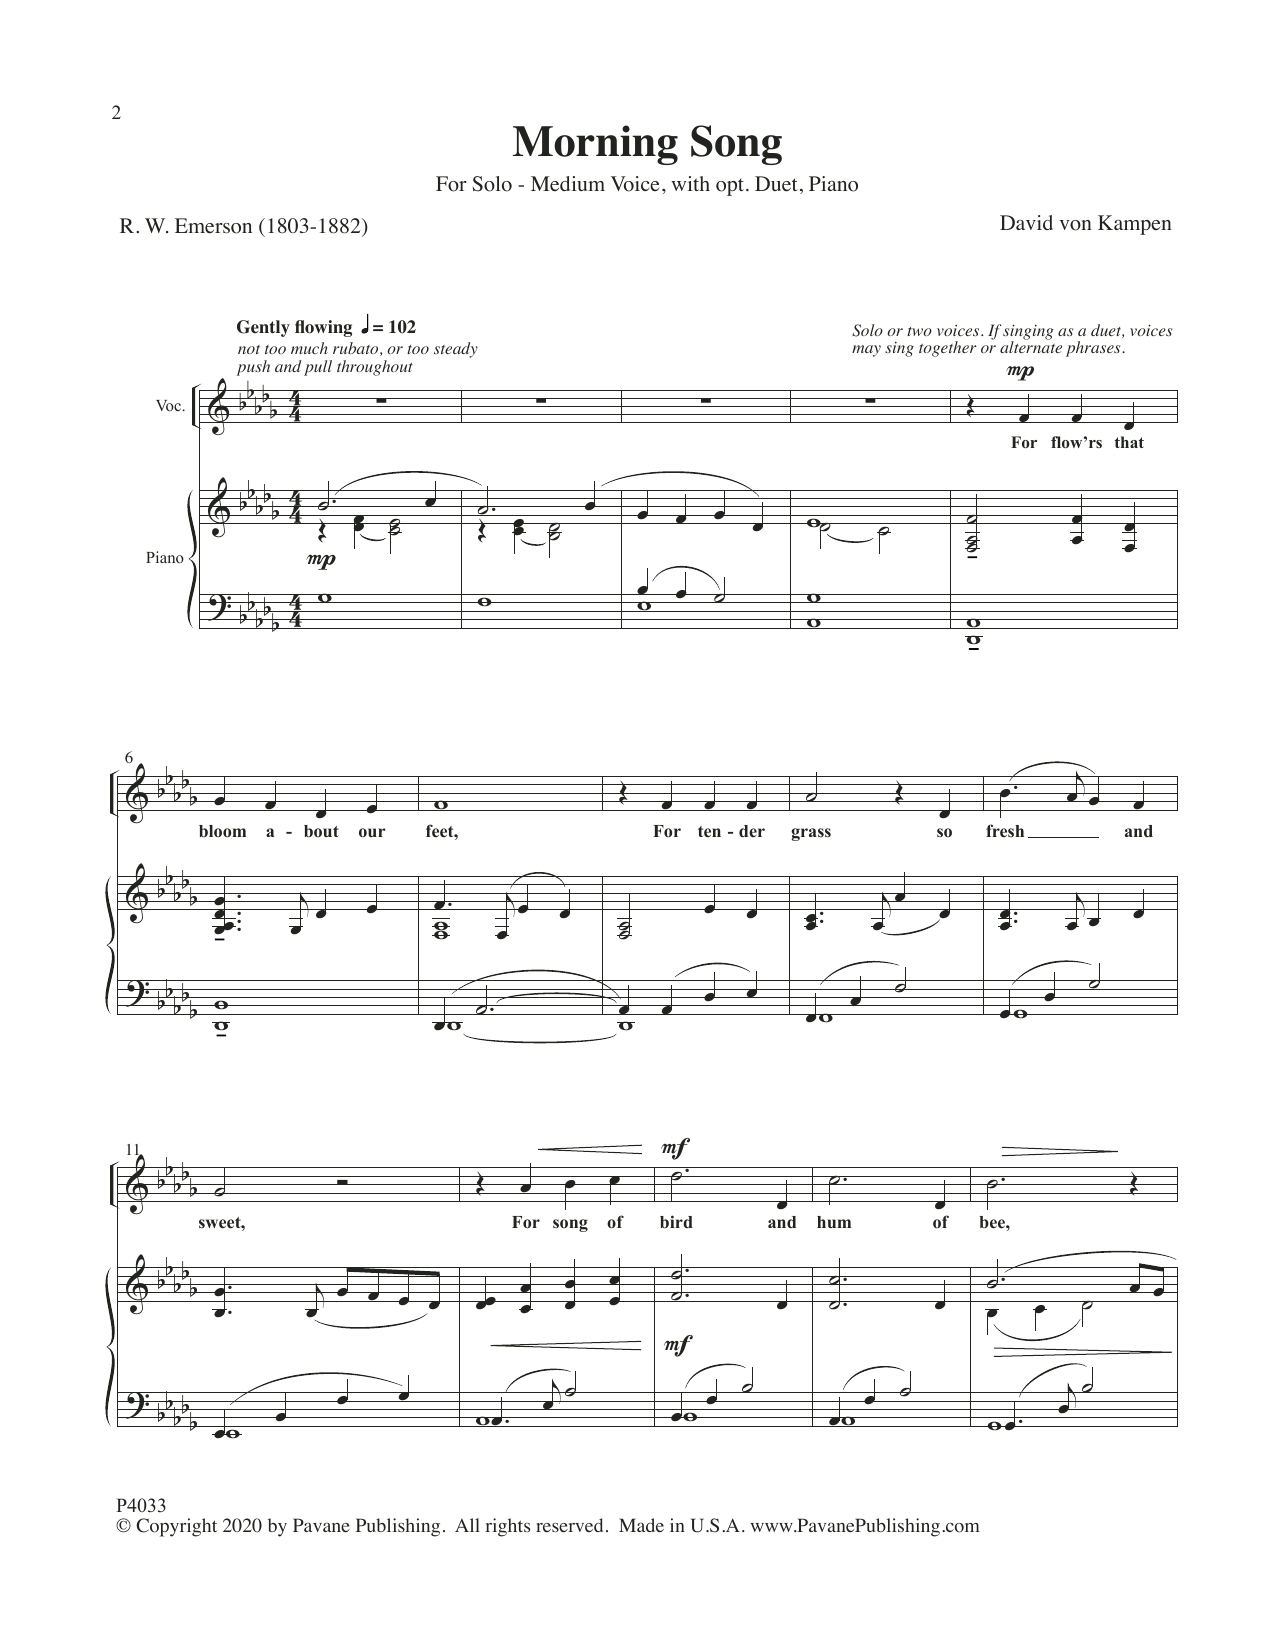 David von Kampen Morning Song Sheet Music Notes & Chords for SATB Choir - Download or Print PDF